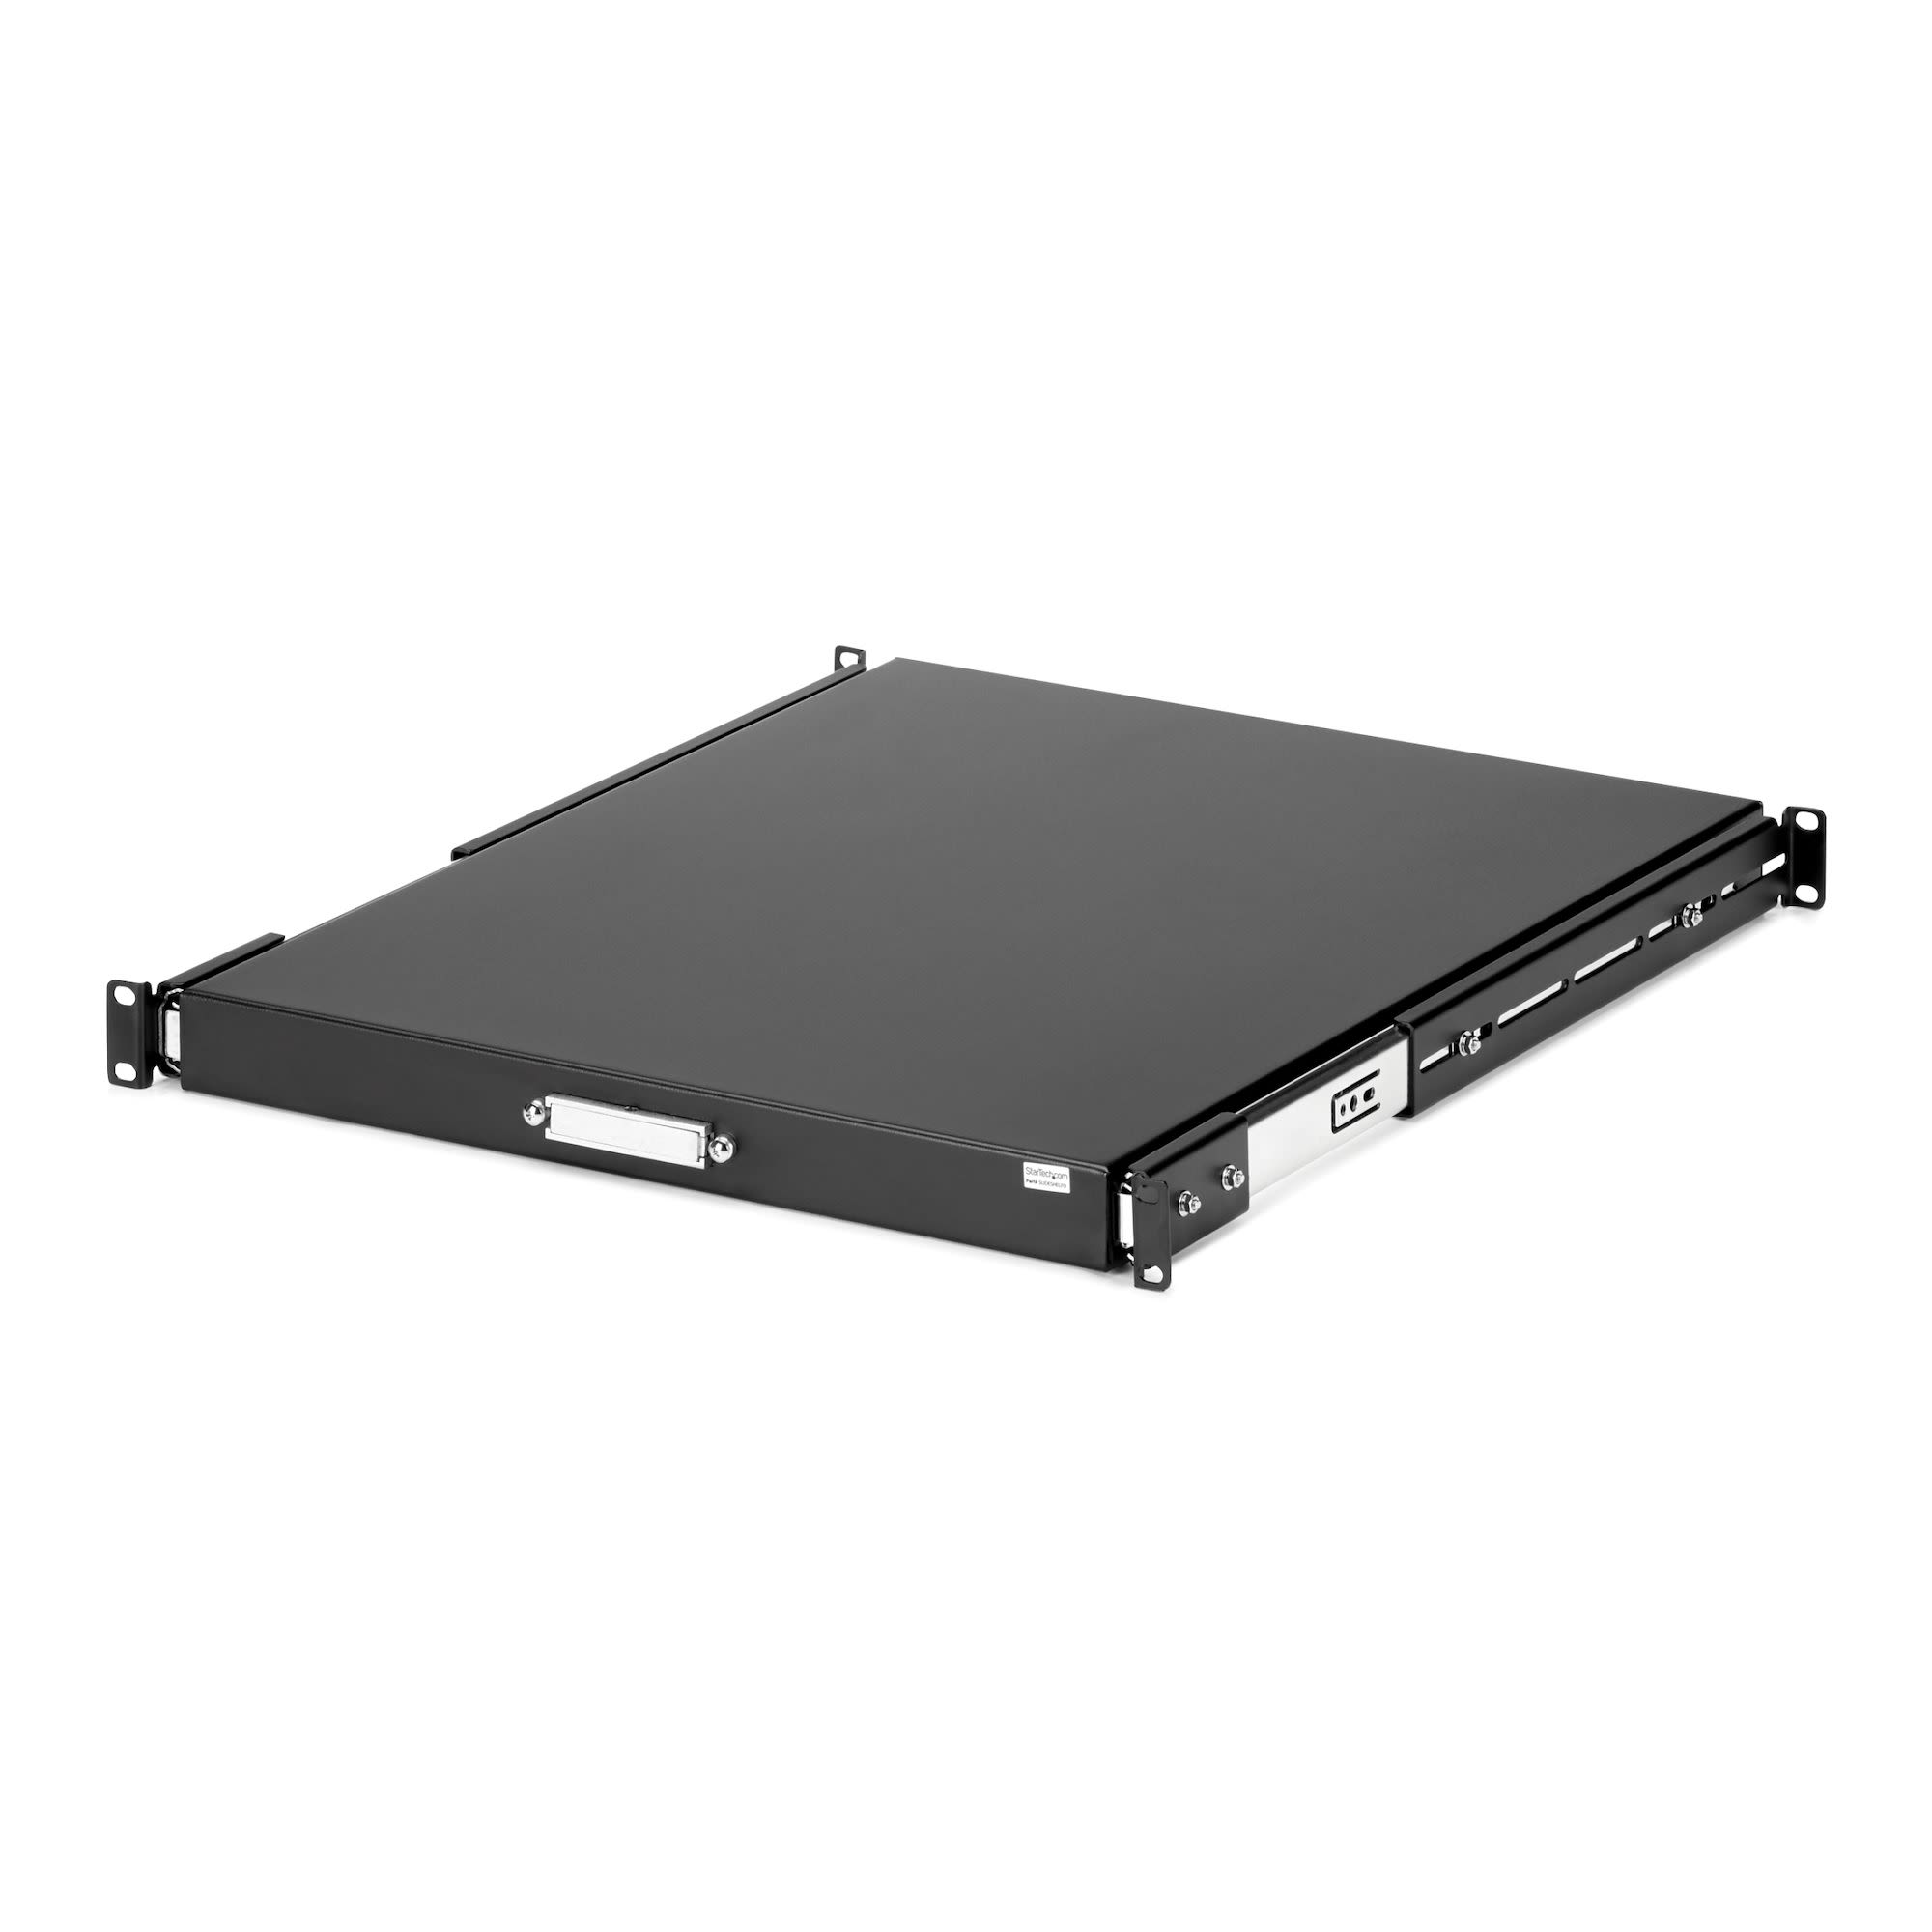 Bandeja para armario en rack de servidores 1U StarTech.com No de Acero Negro, 550mm x 483mm, carga máx. 25kg